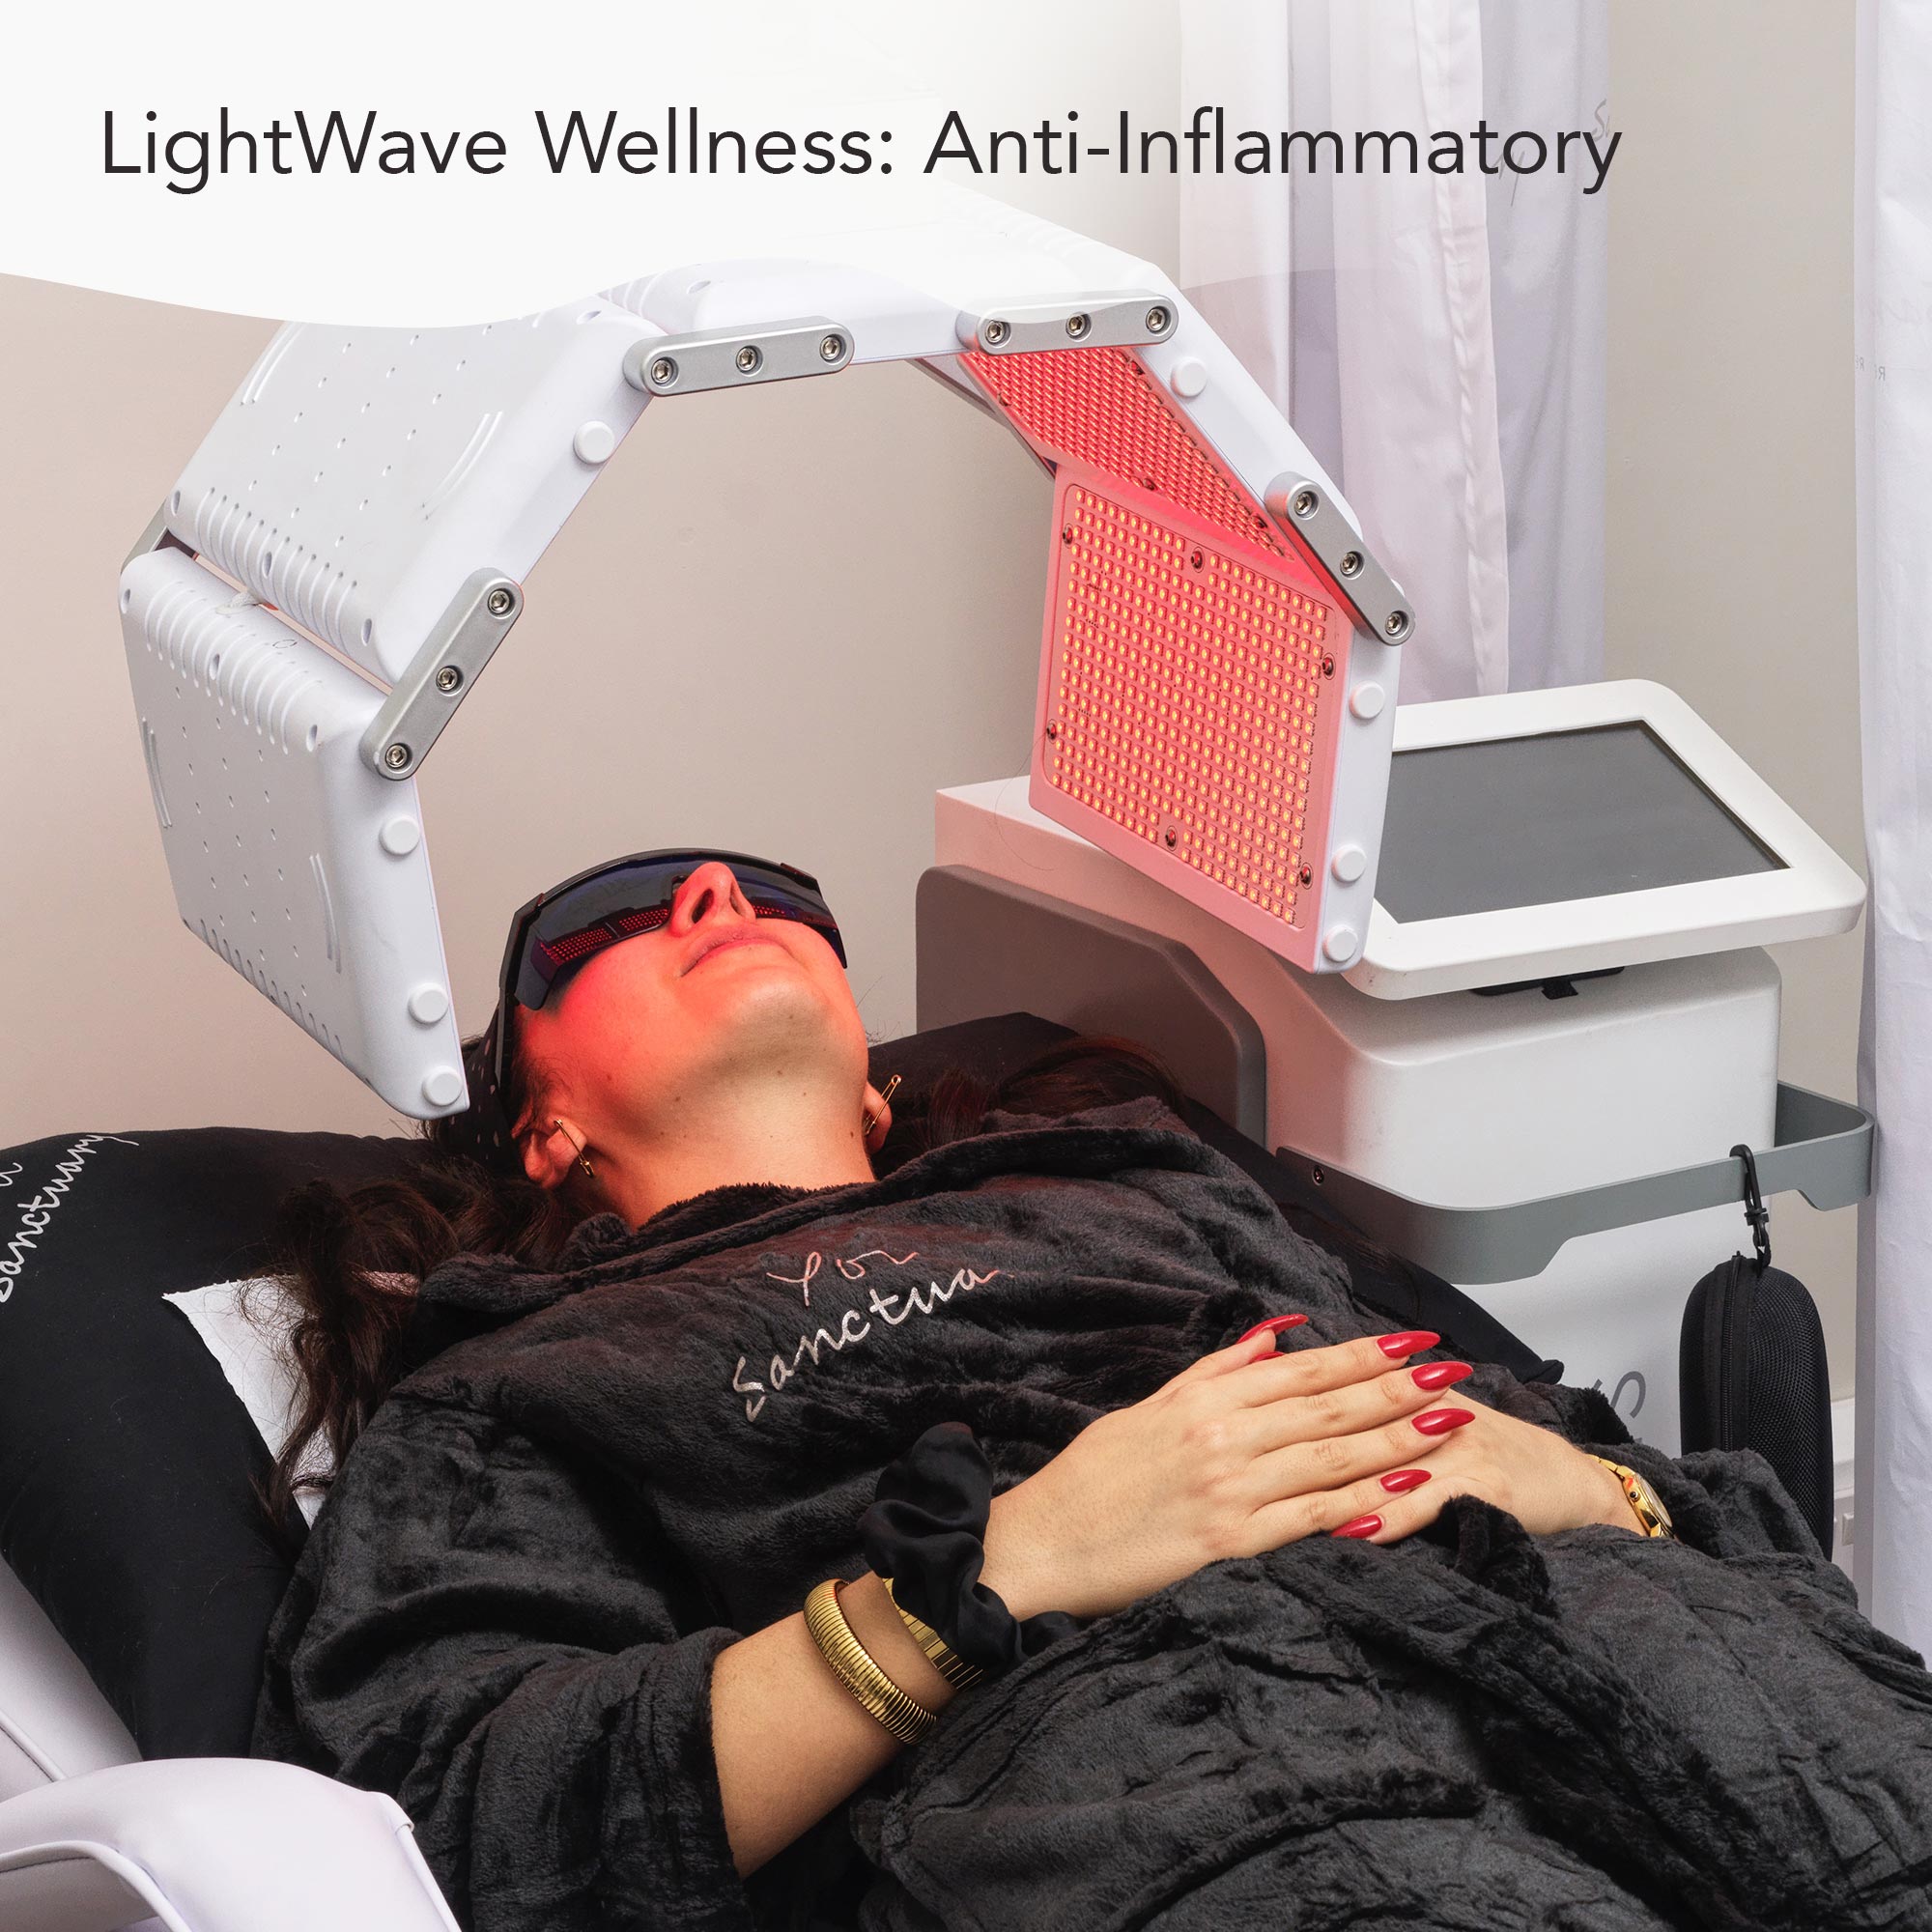 LightWave Wellness: Anti-Inflammatory